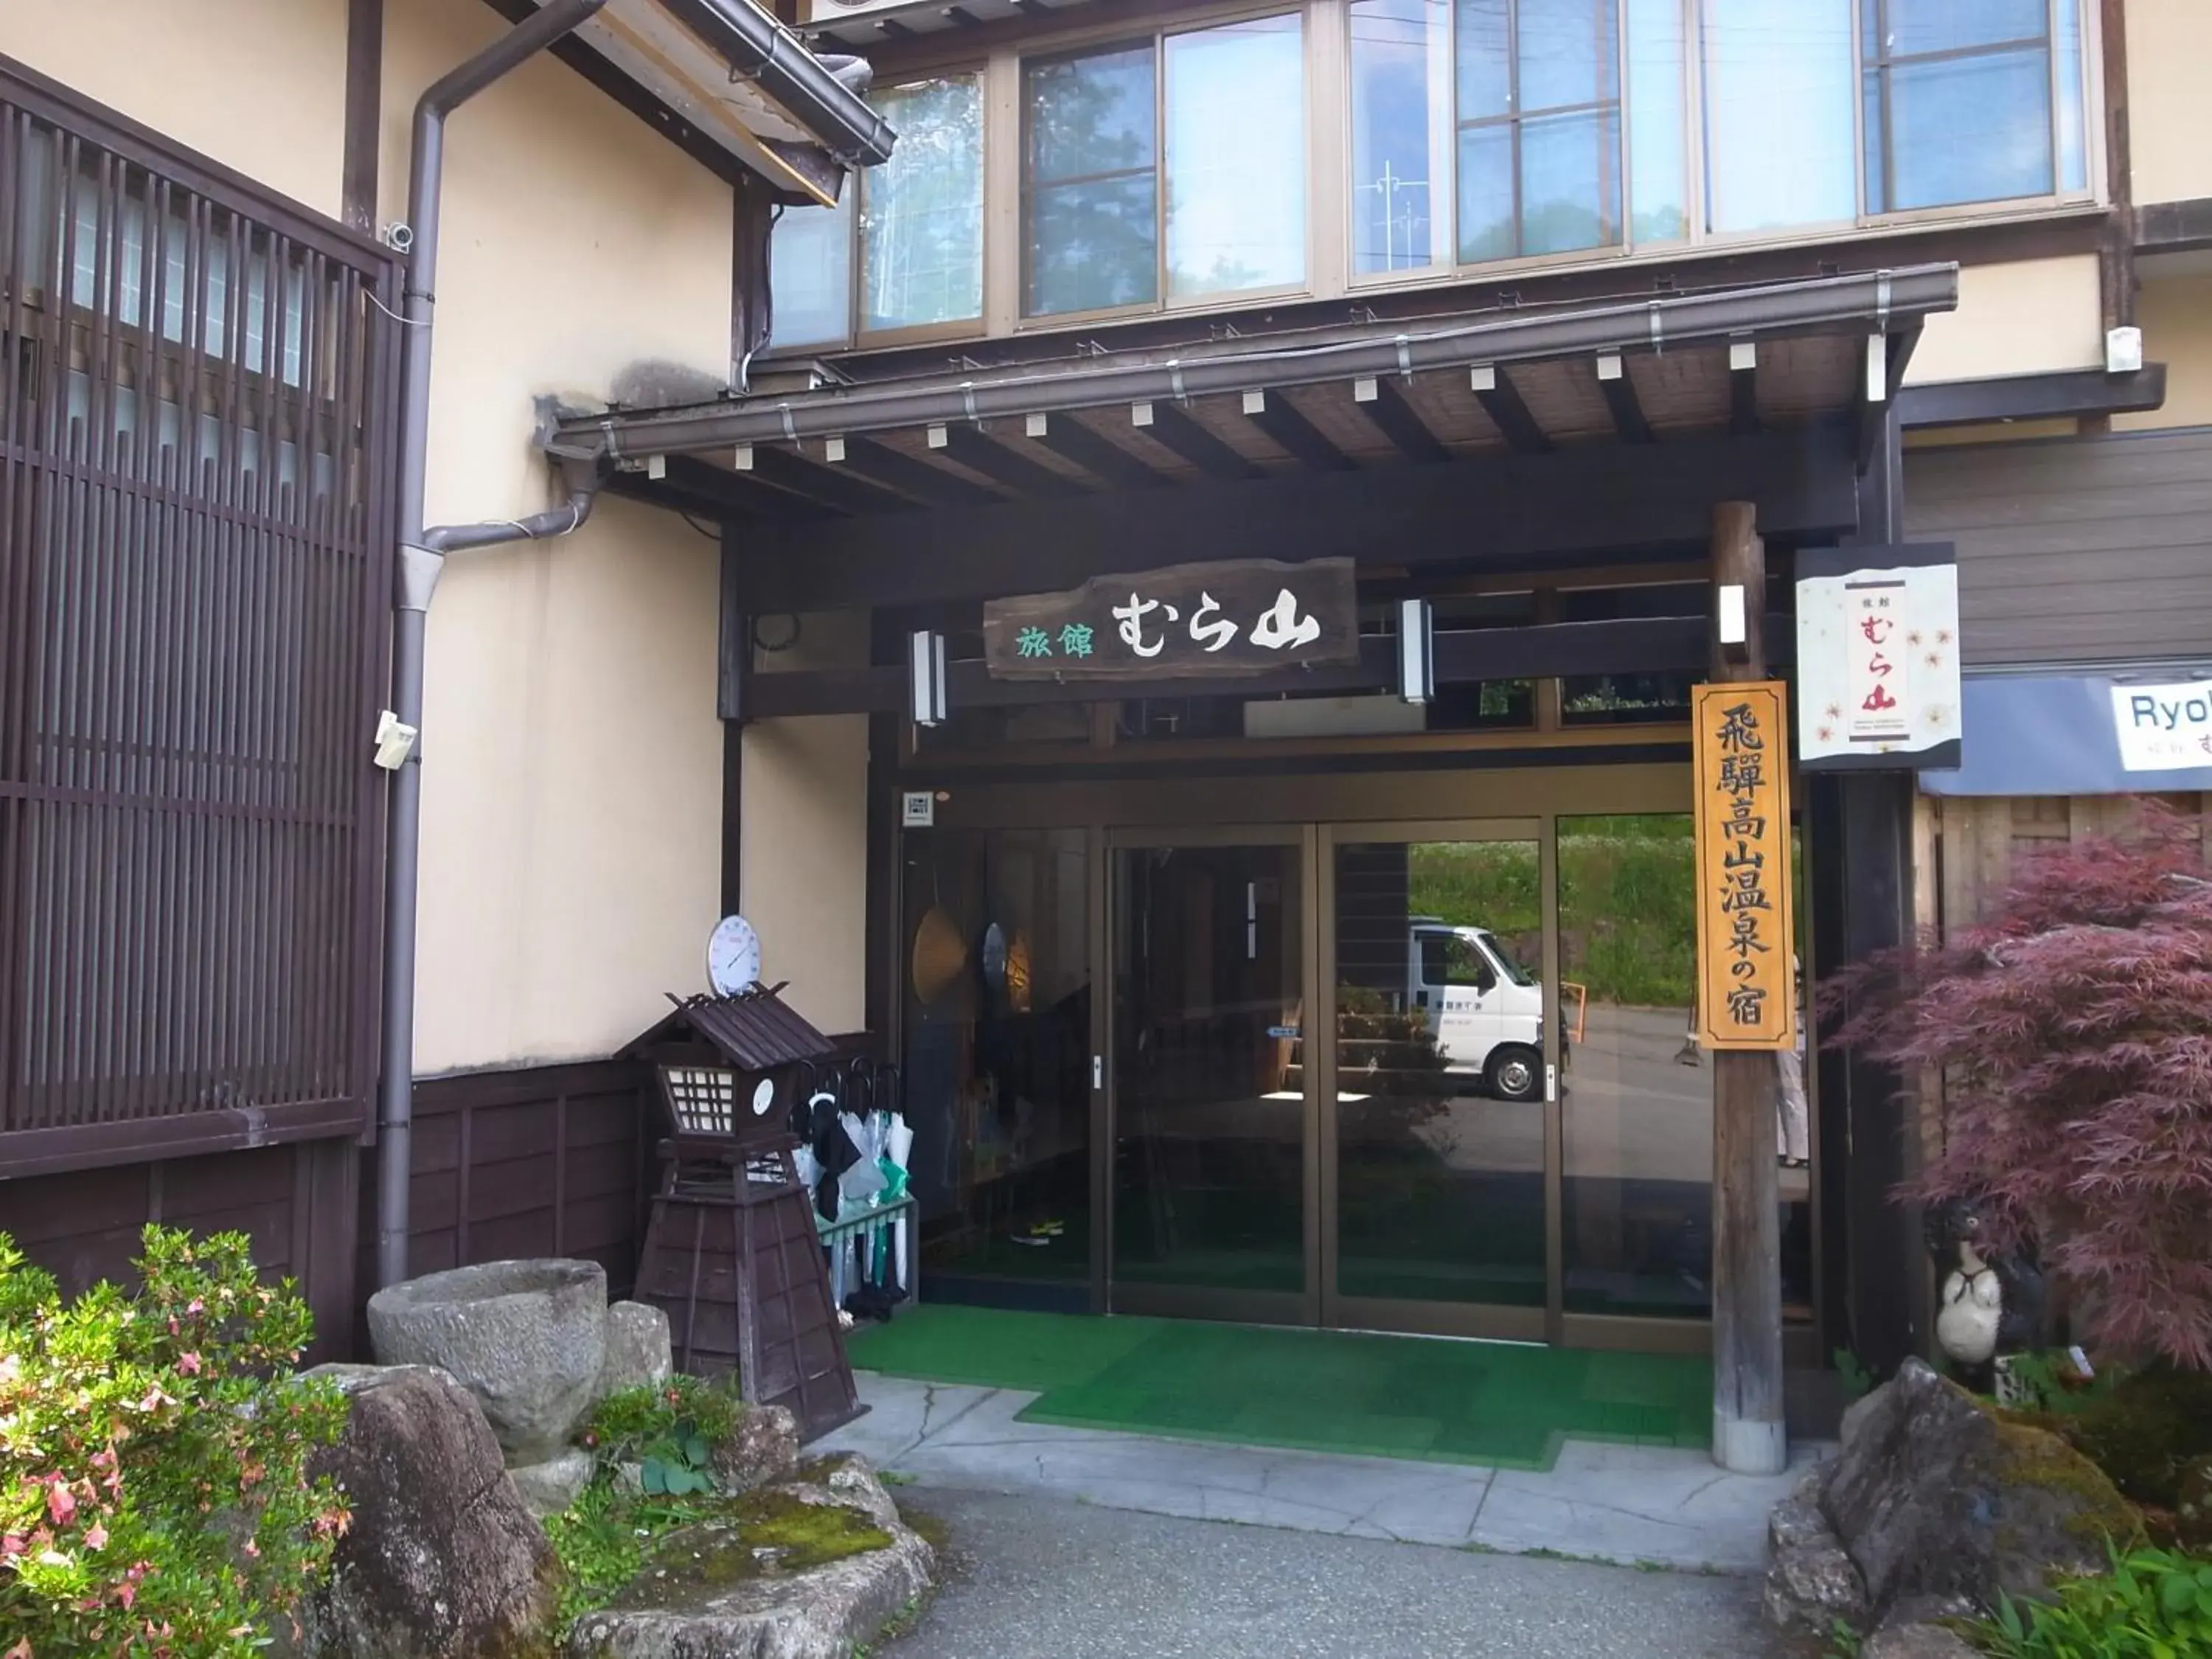 Facade/Entrance in Ryokan Murayama